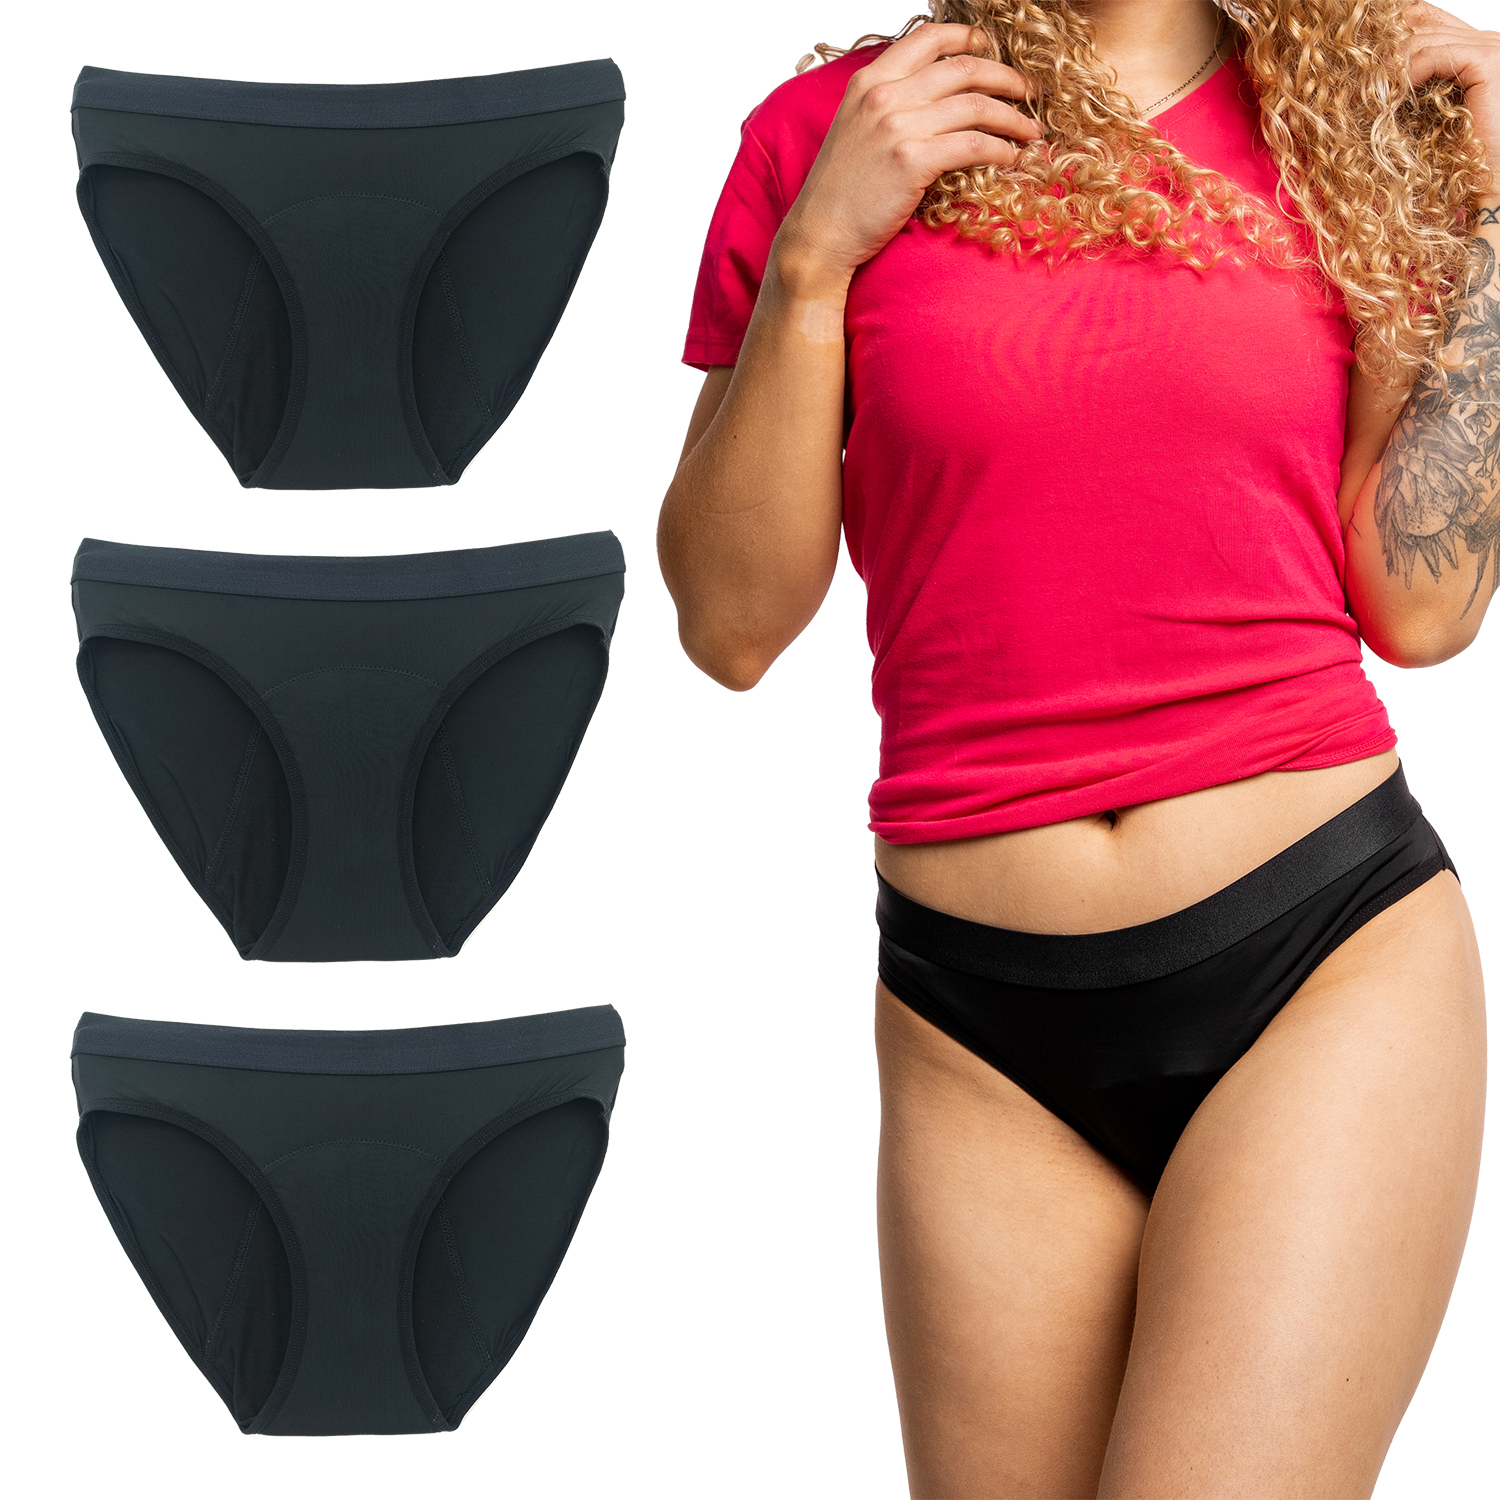  Period Underwear Menstrual Women Bikini Panties 3 Pack Verdi  S